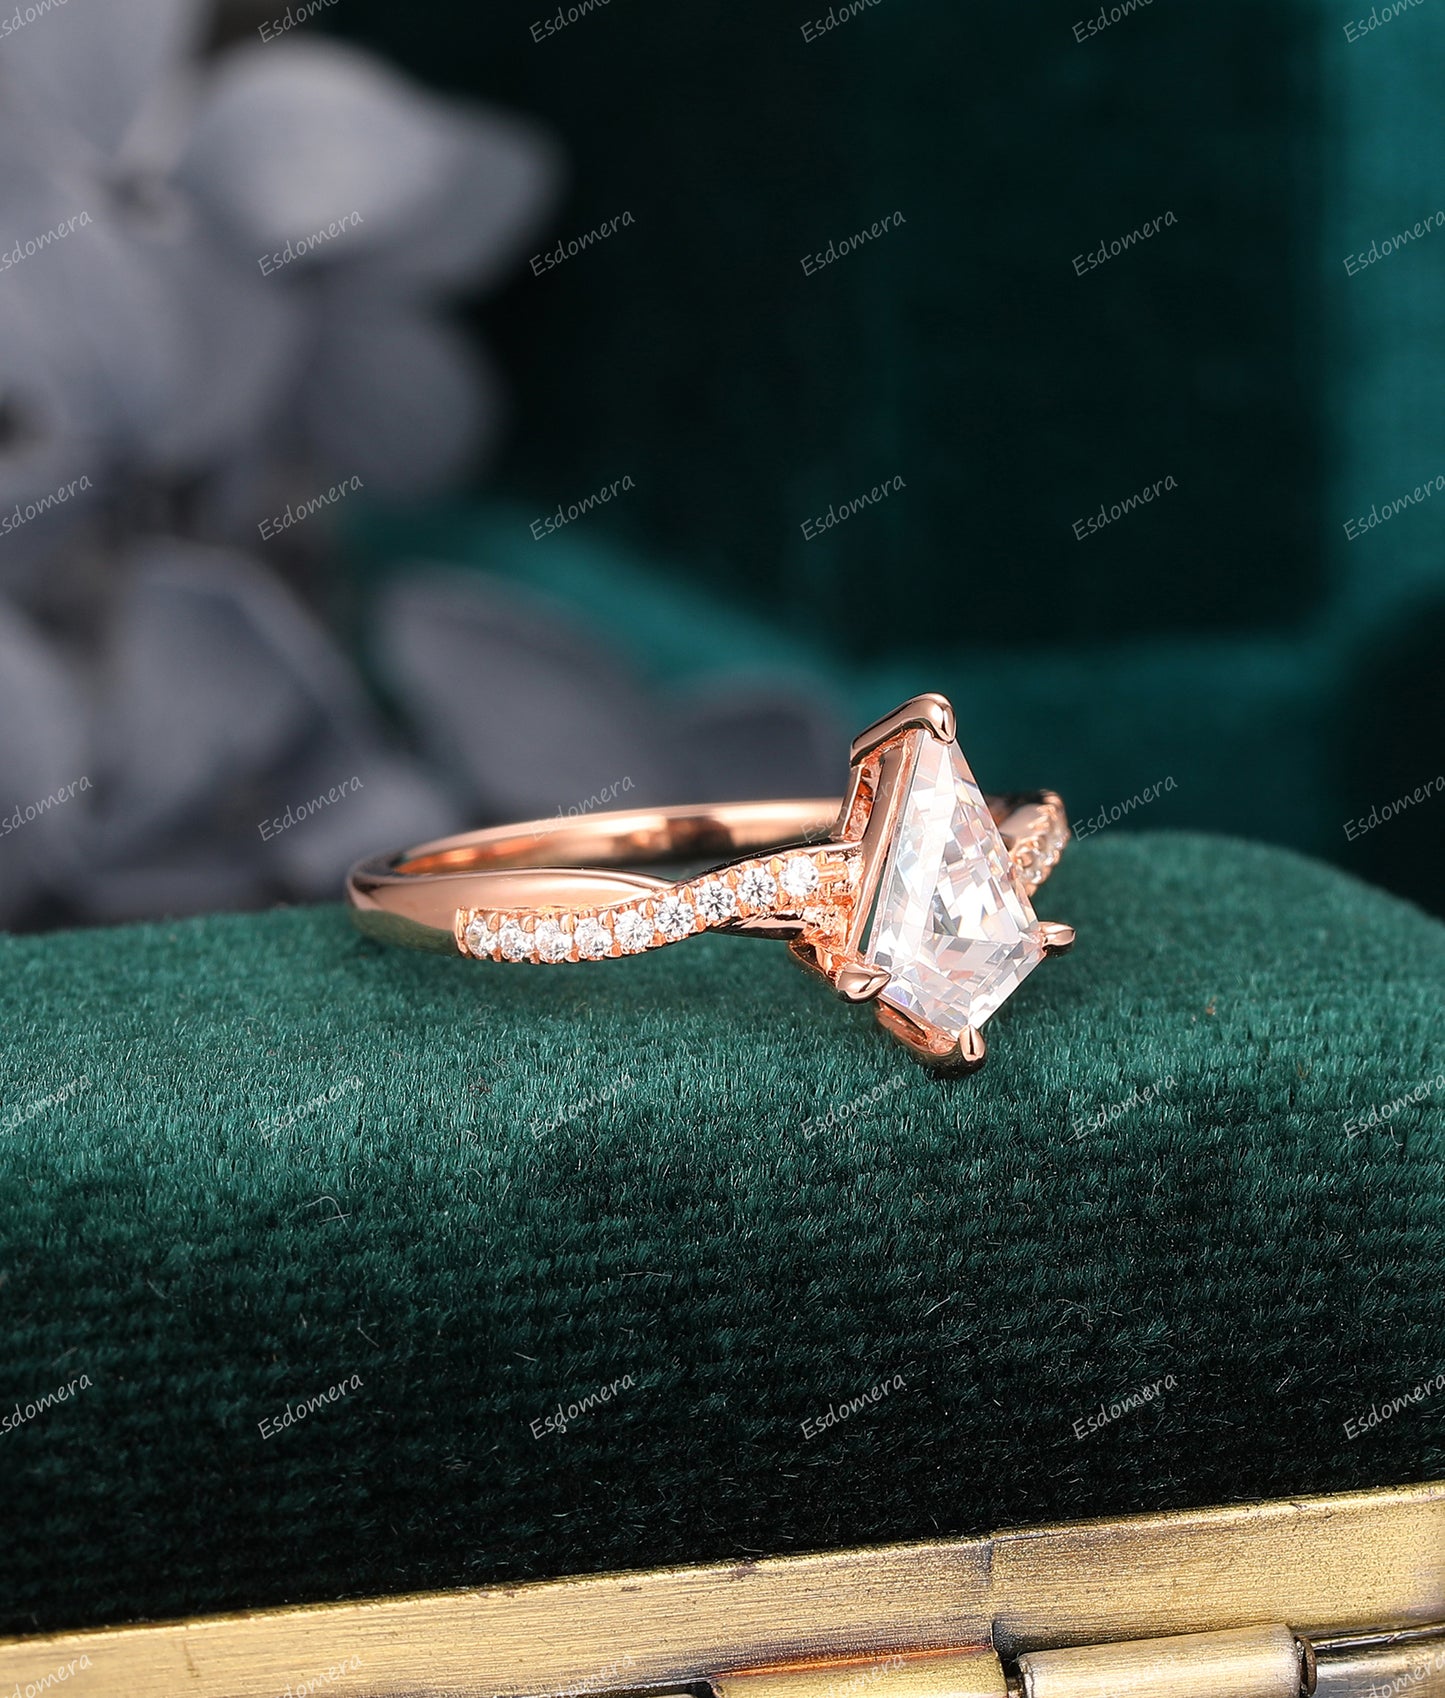 14K Gold 1.35CT Kite Cut Moissanite Engagement Ring, Twist Band Wedding Anniversary Ring